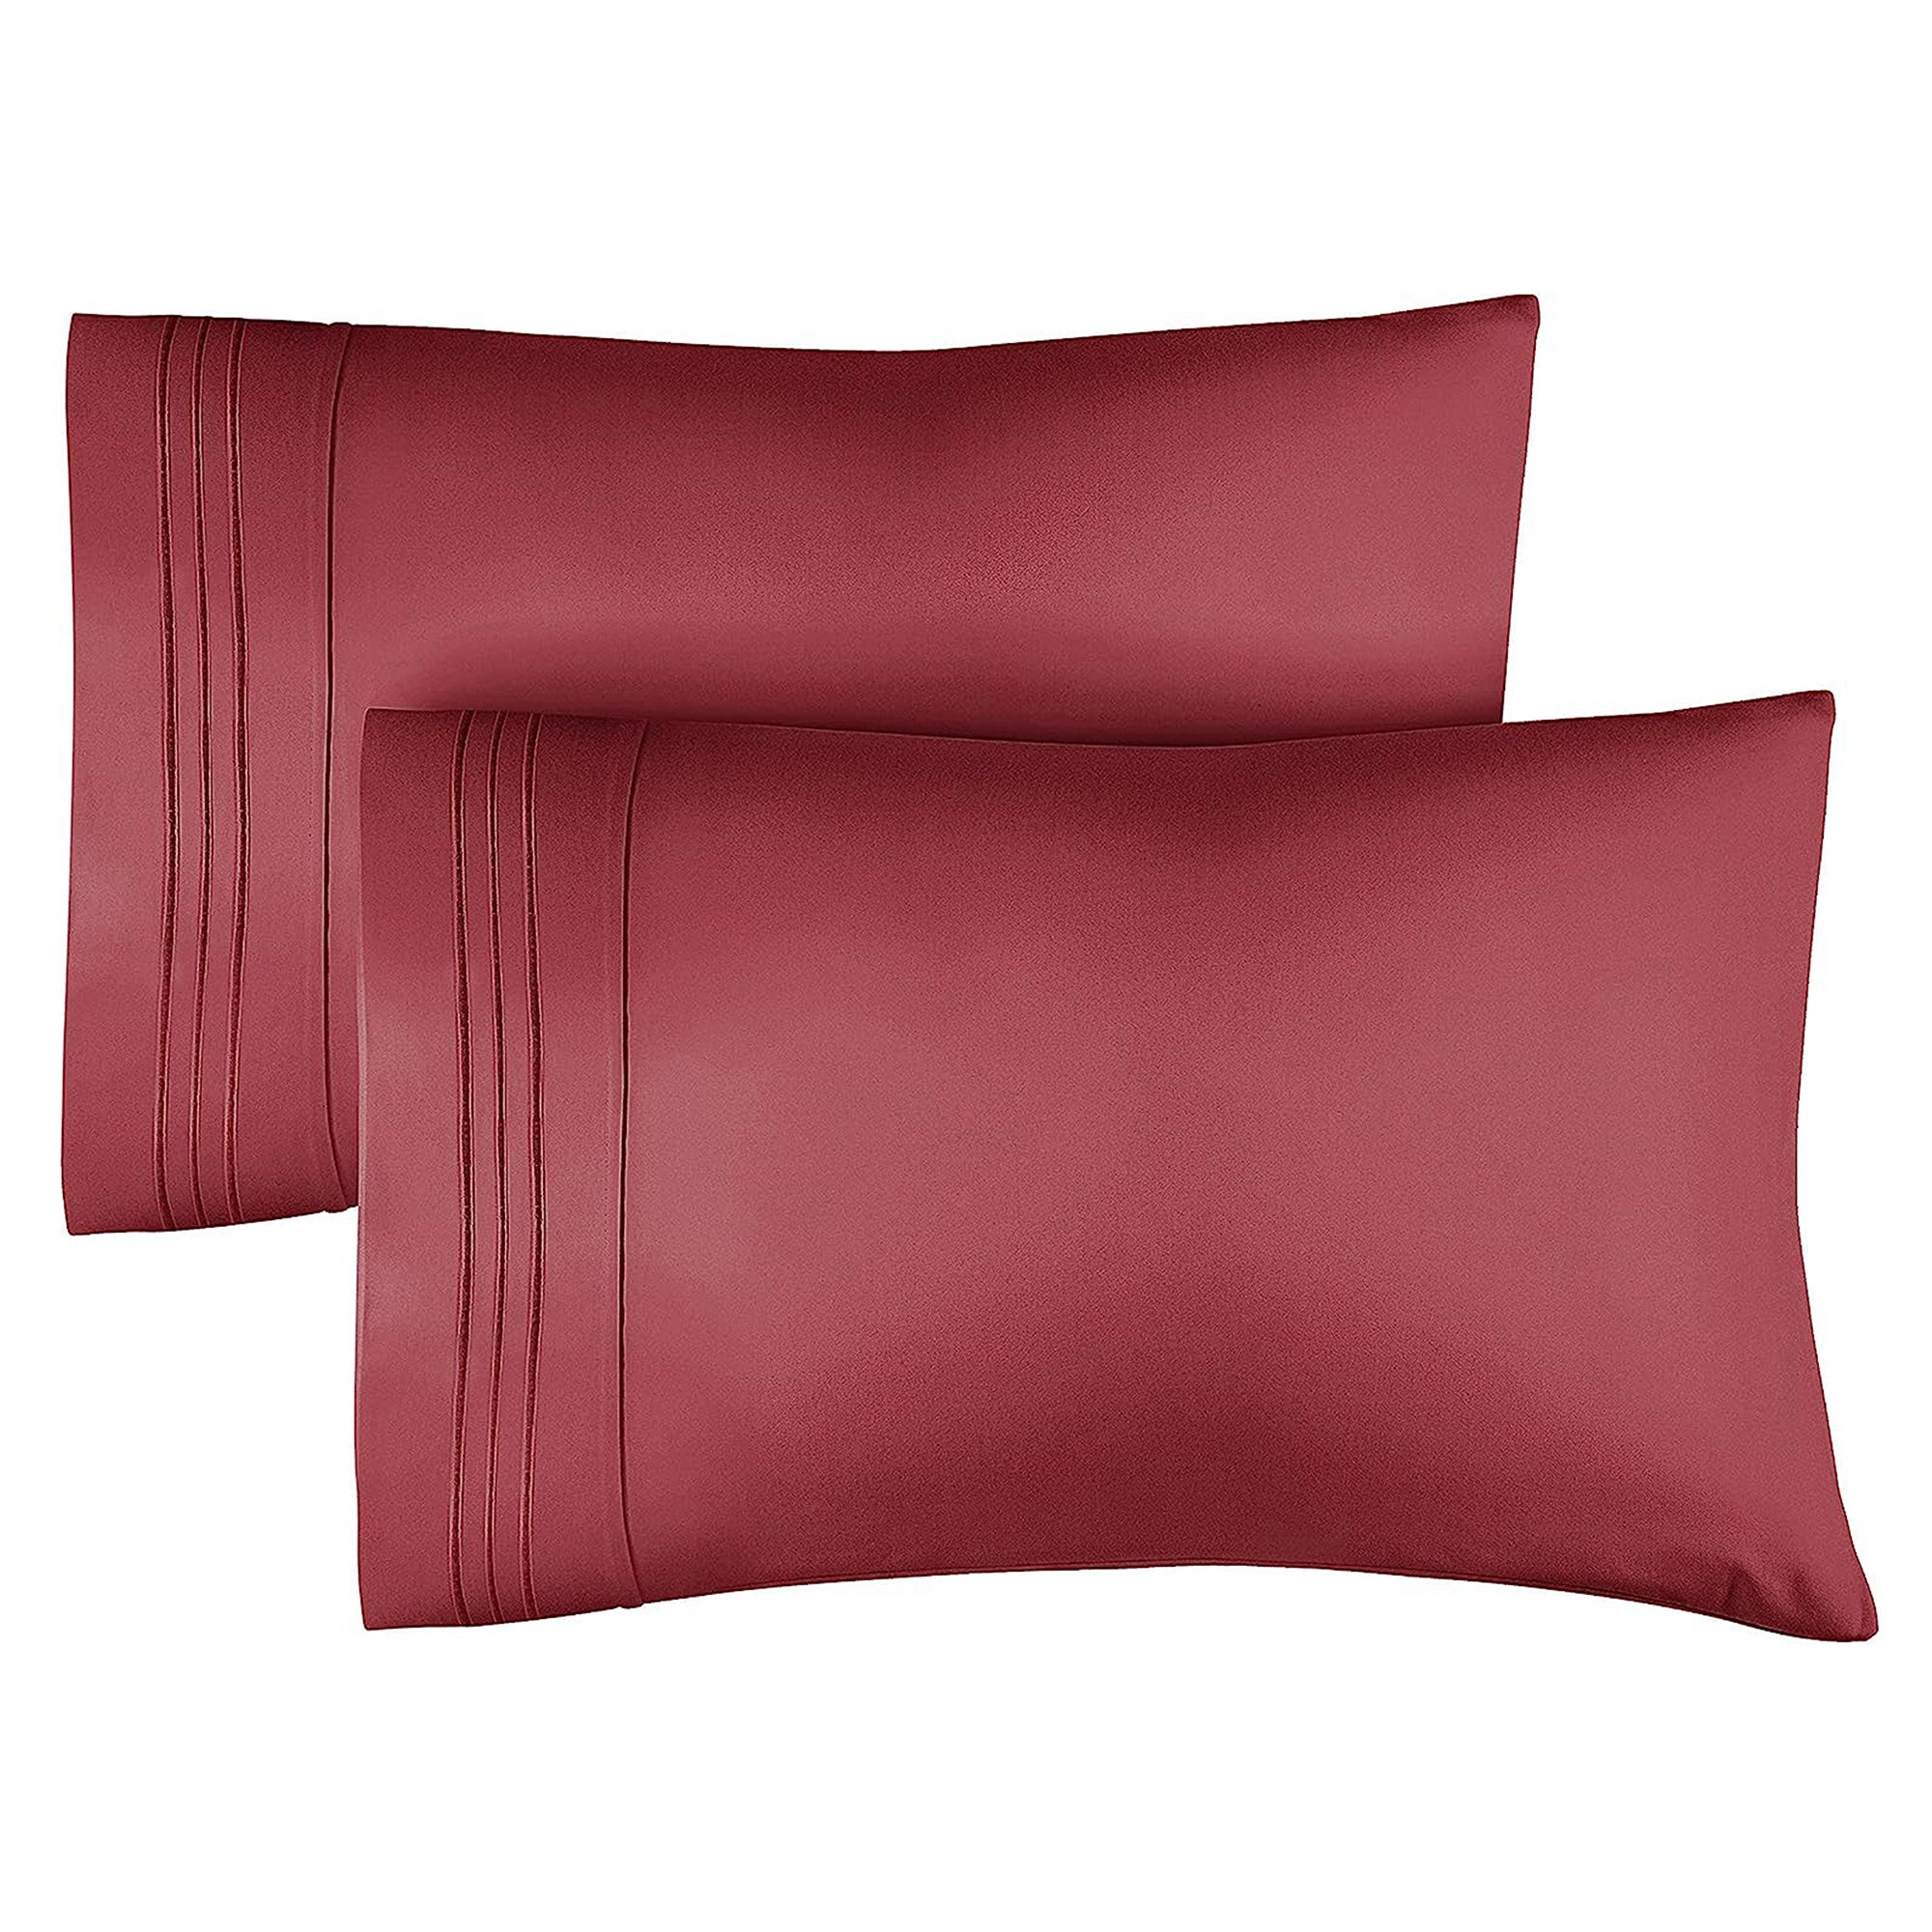 tes 2 Pillowcase Set - Burgundy